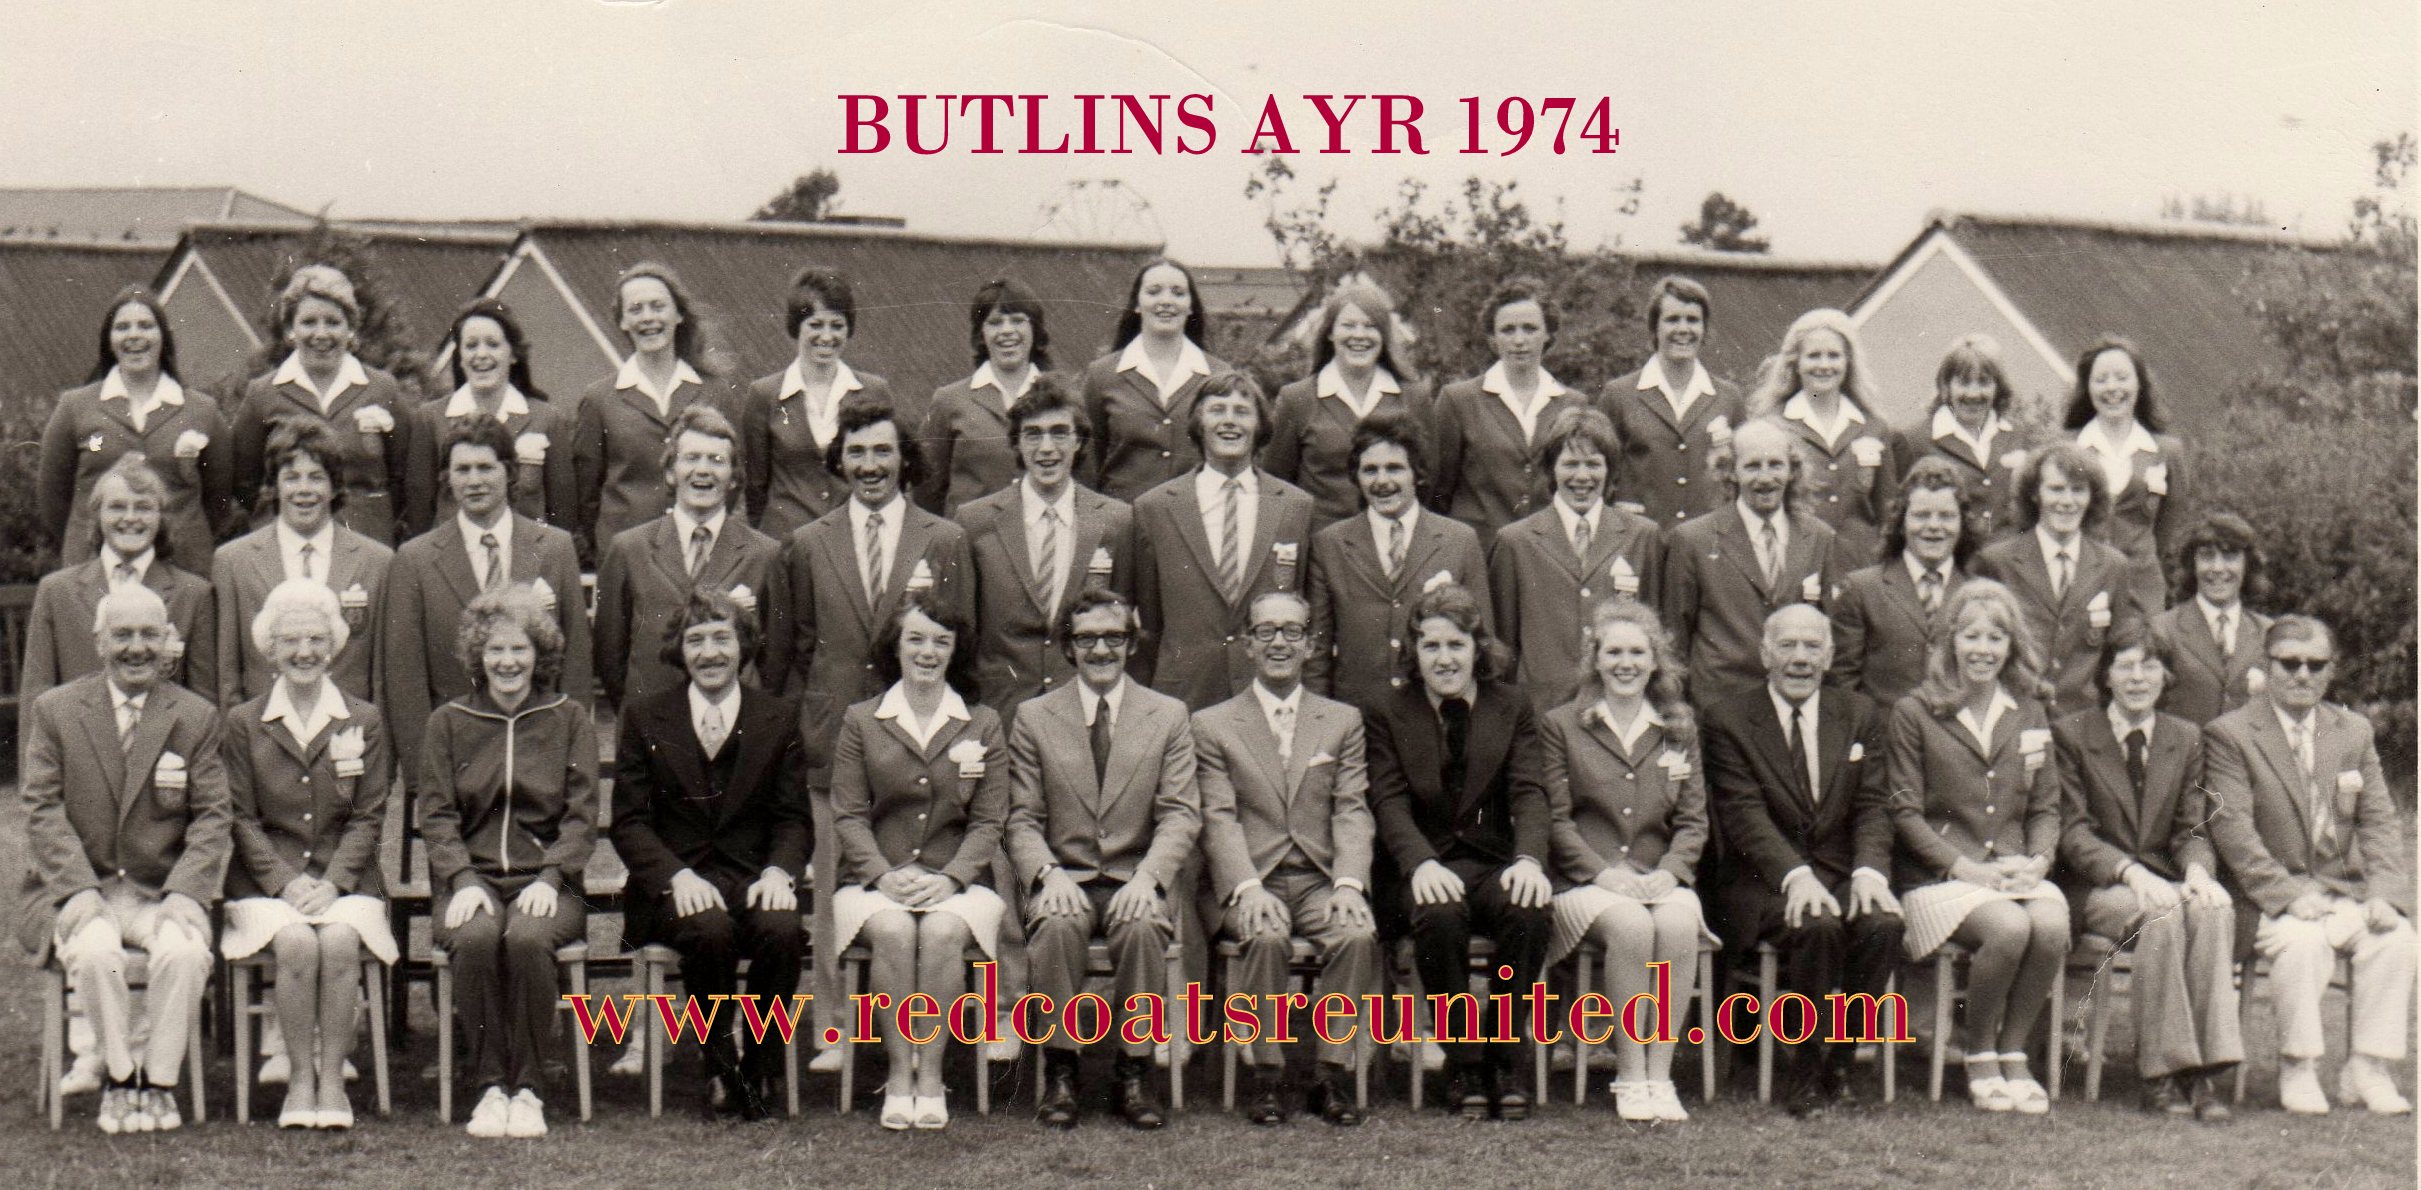 Butlins Ayr 1974 at Redcoats Reunited